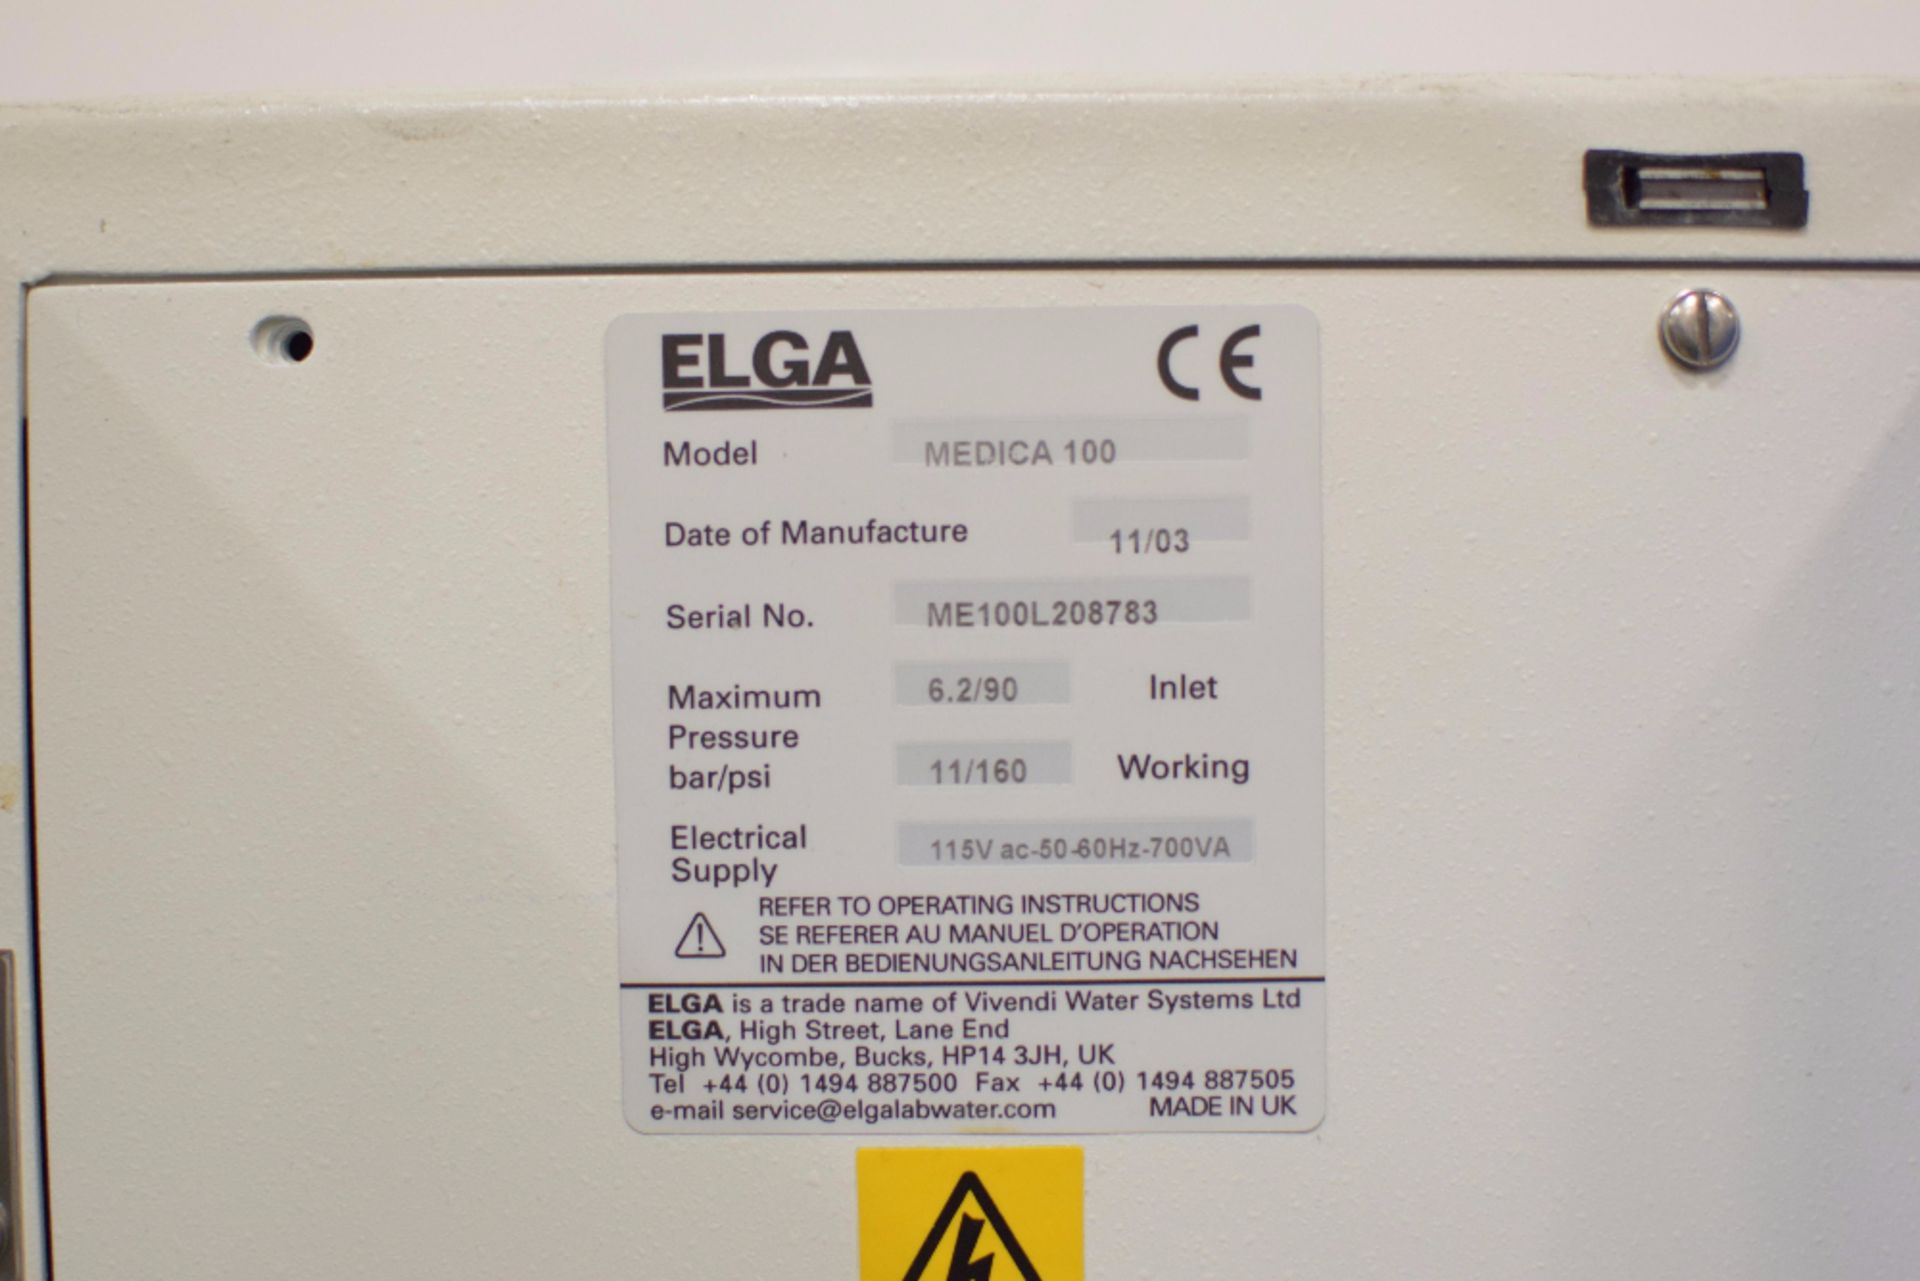 ELGA Medica 100 Water Purification System - Image 4 of 6